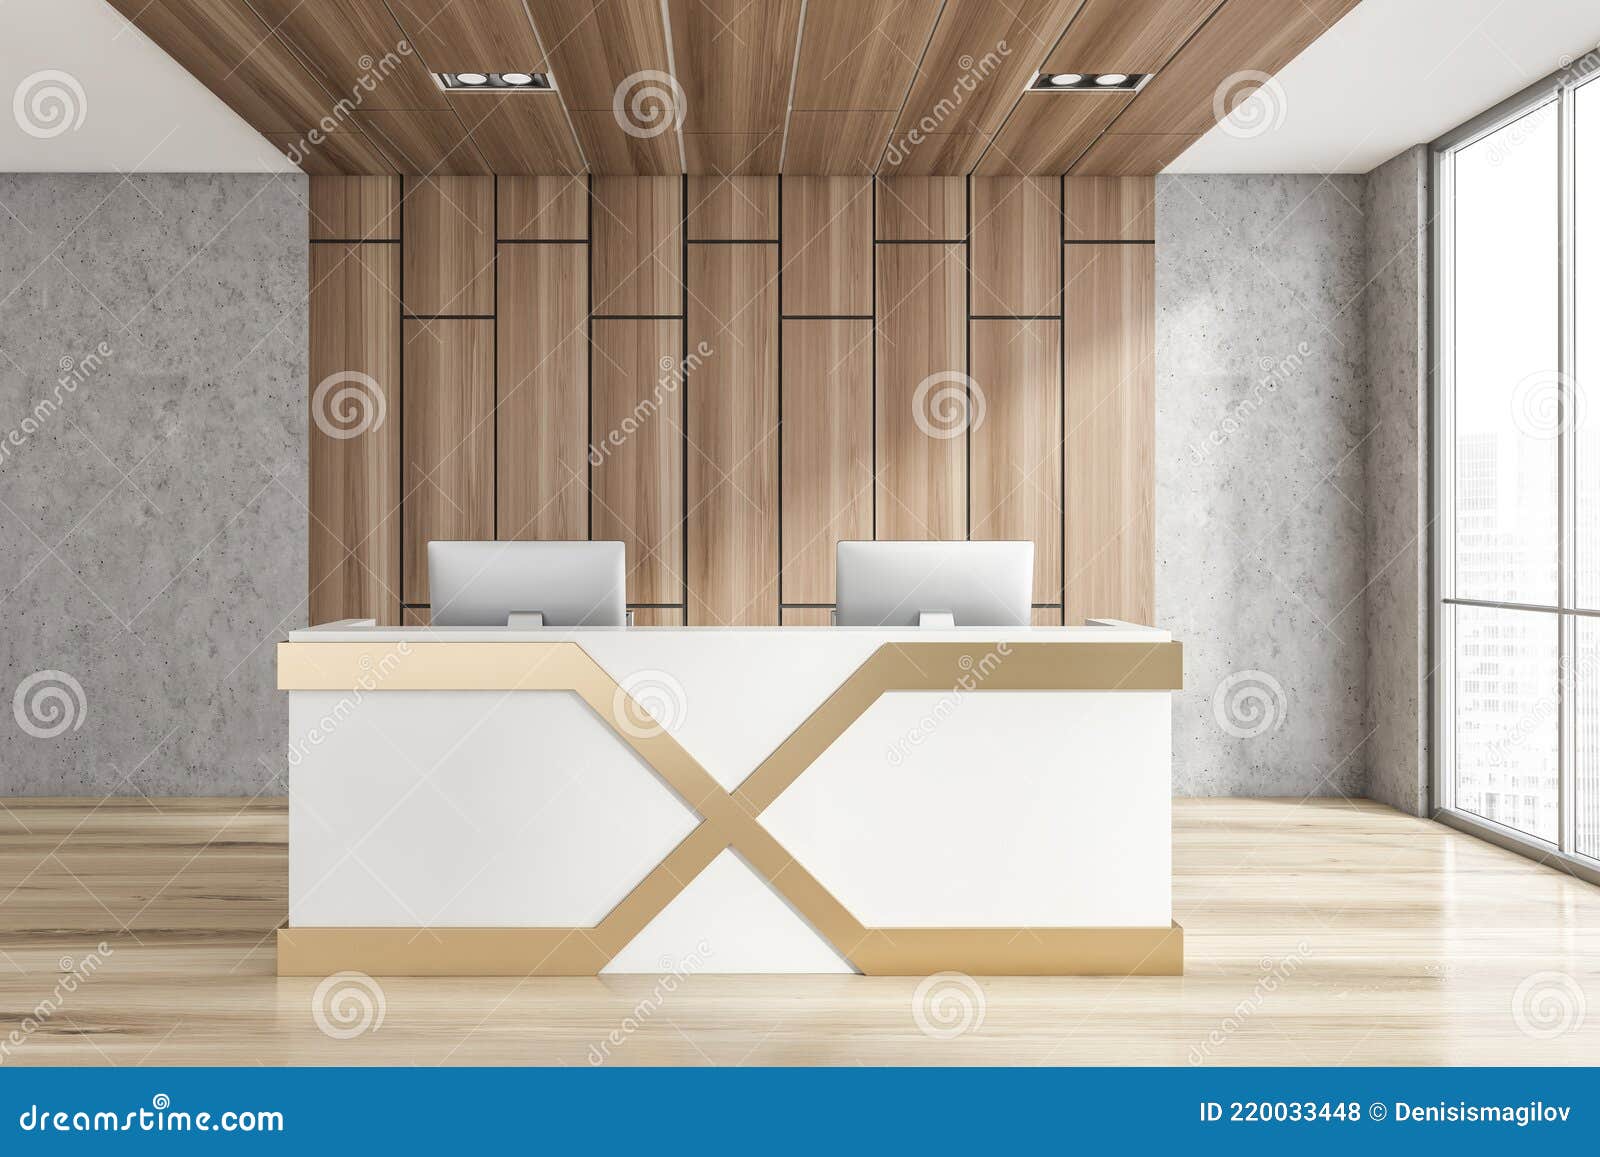 Minimalistic Office Interior Design with Reception Counter Stock  Illustration - Illustration of appointment, illumination: 220033448